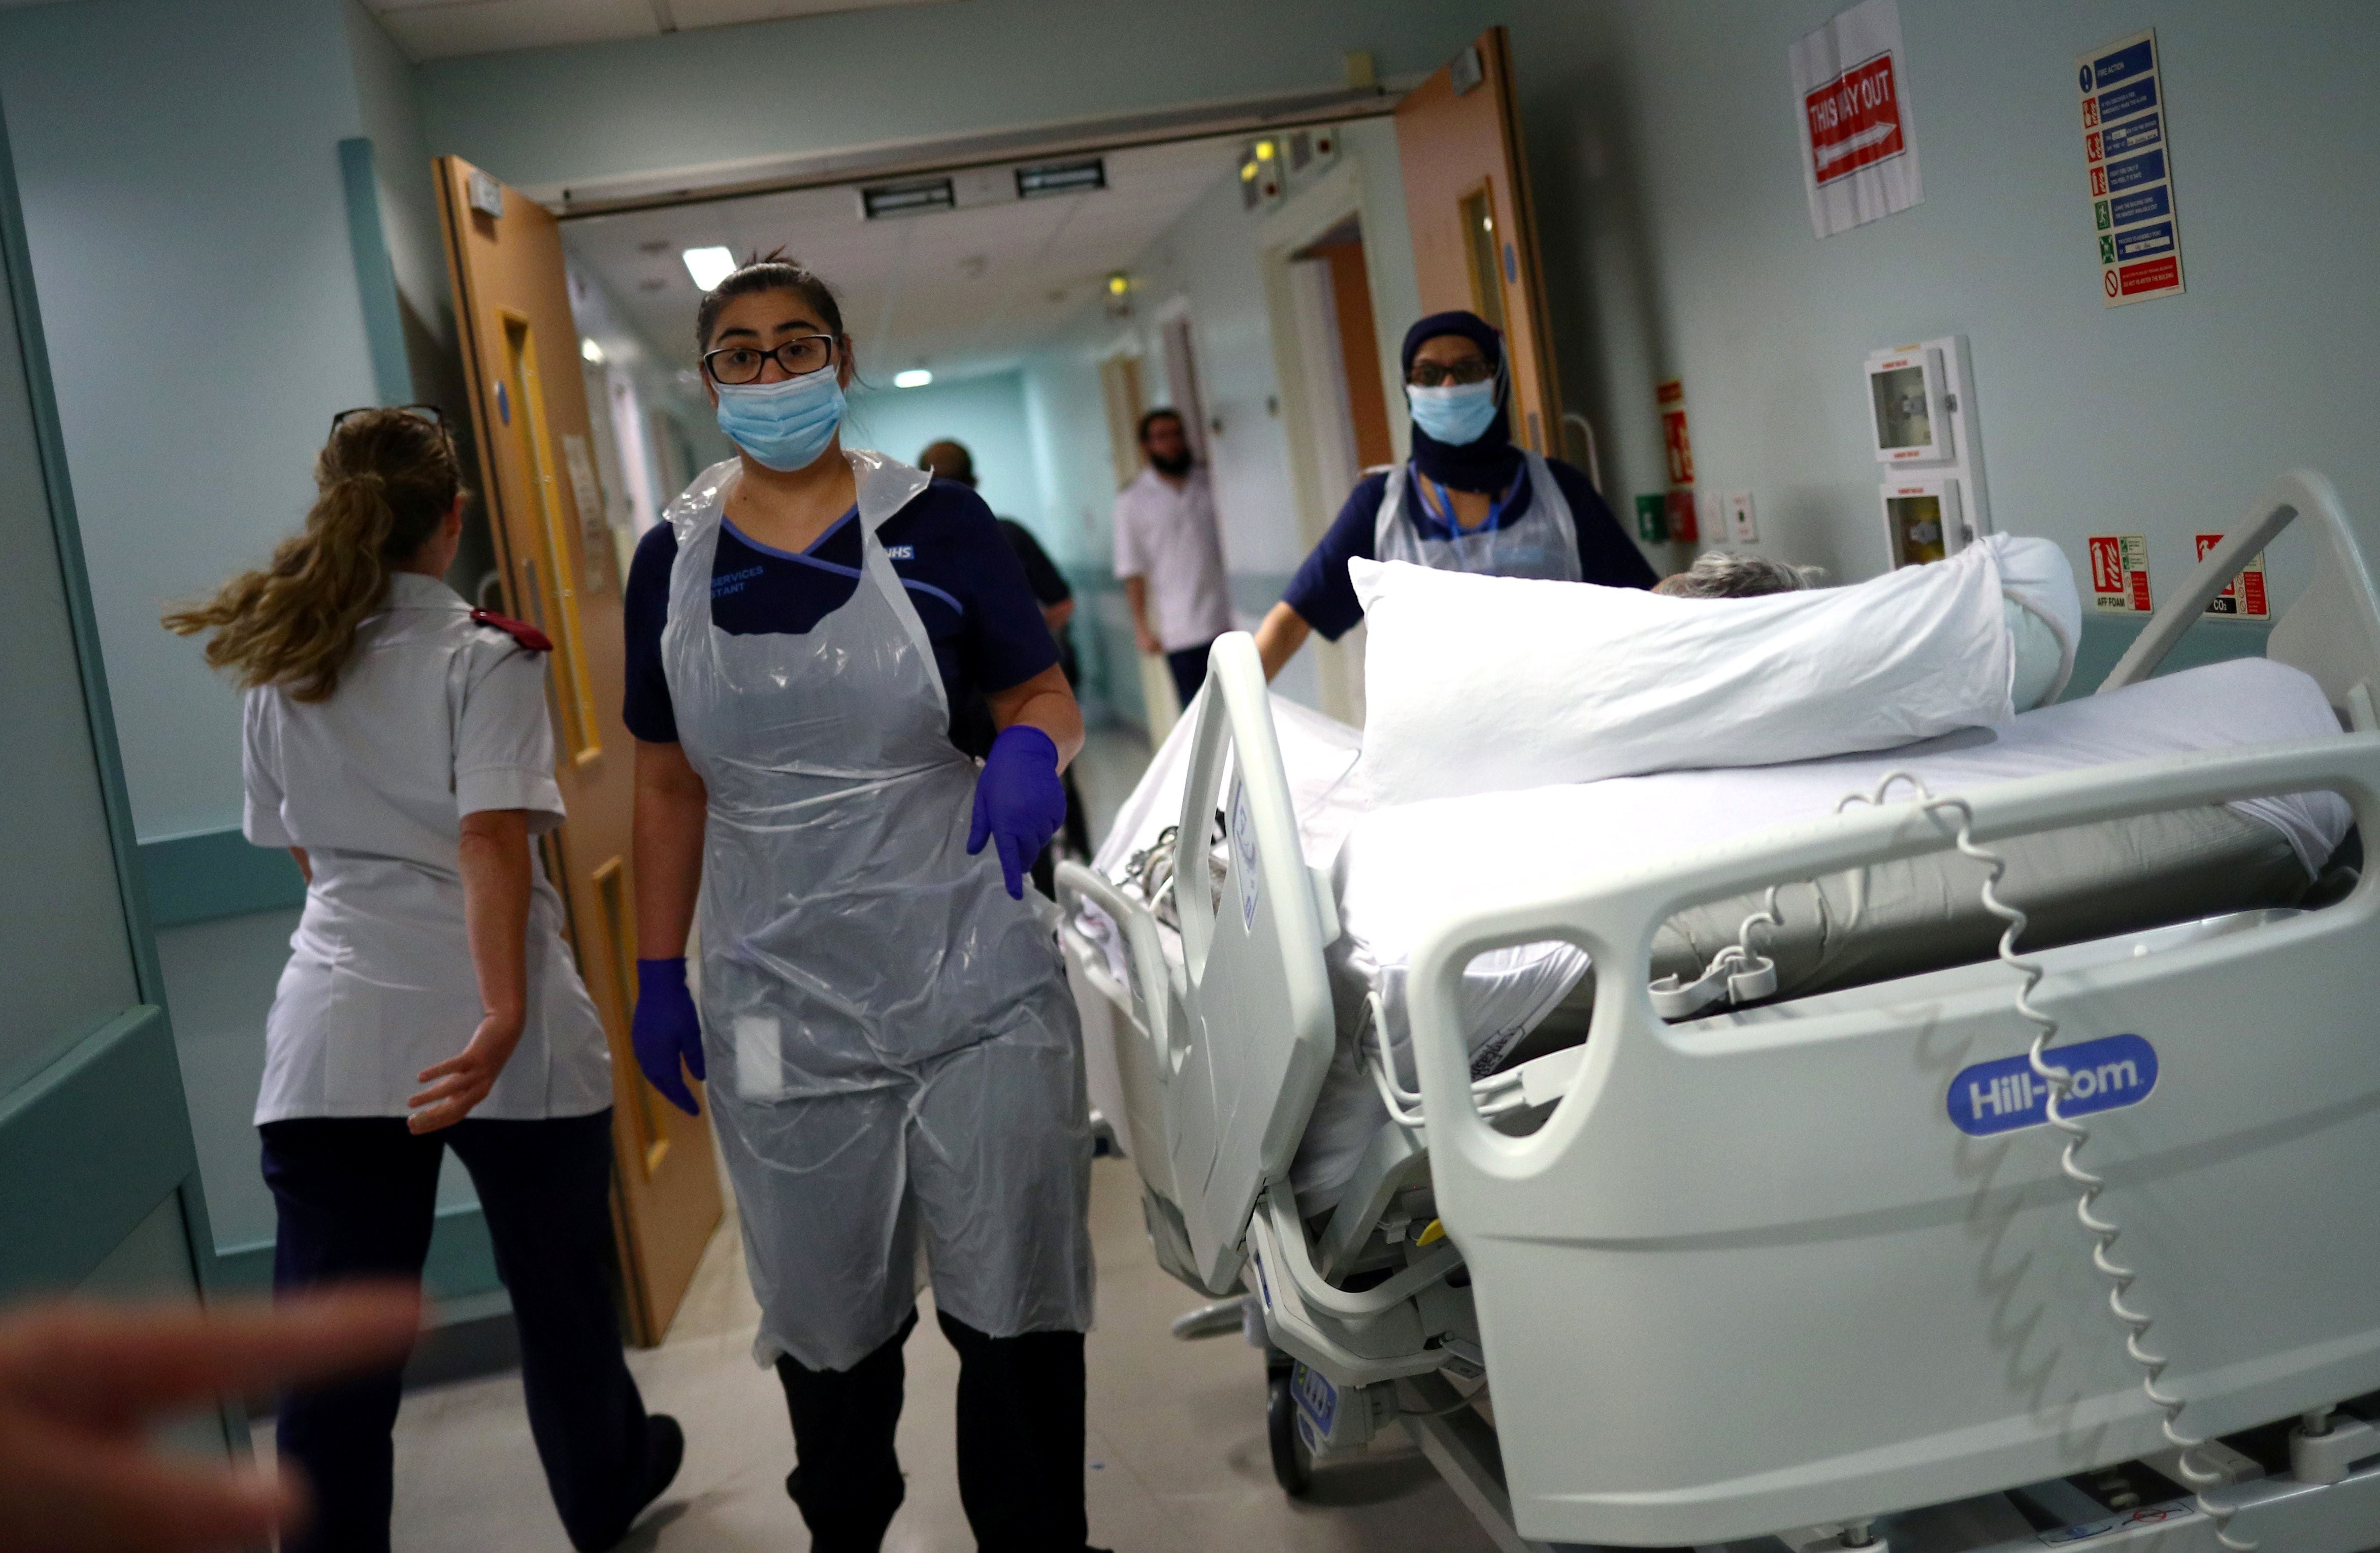 NHS staff in hospital corridor